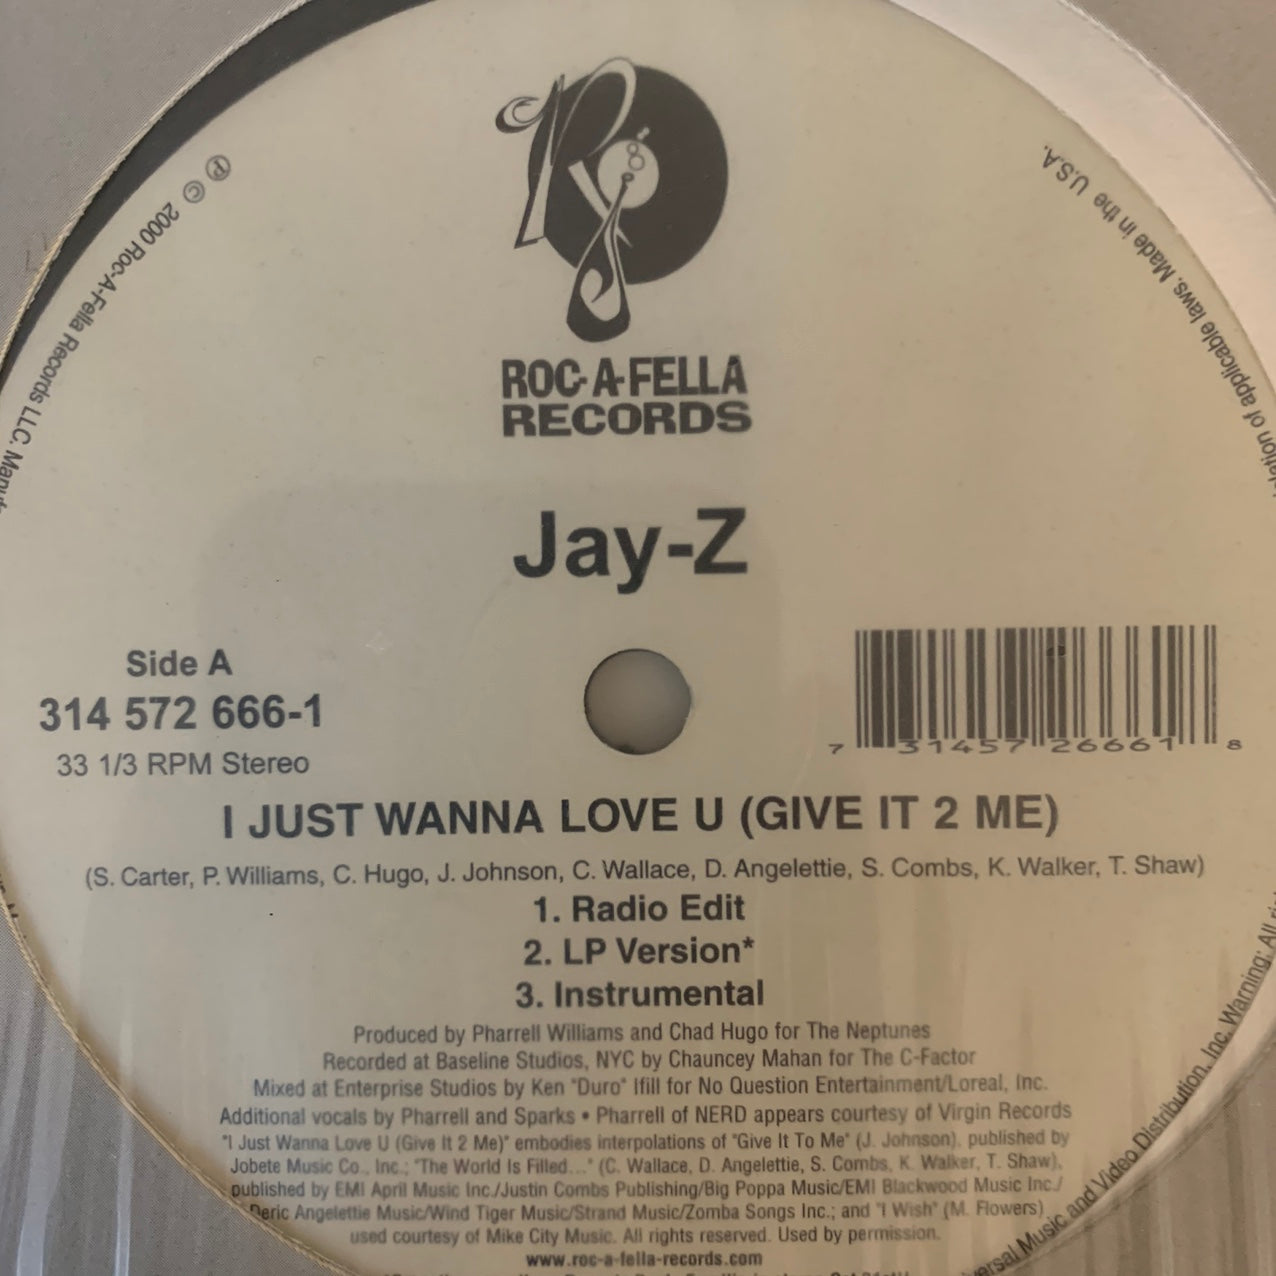 Jay-Z “I Just Wanna Love You” 6 Version 12inch Vinyl